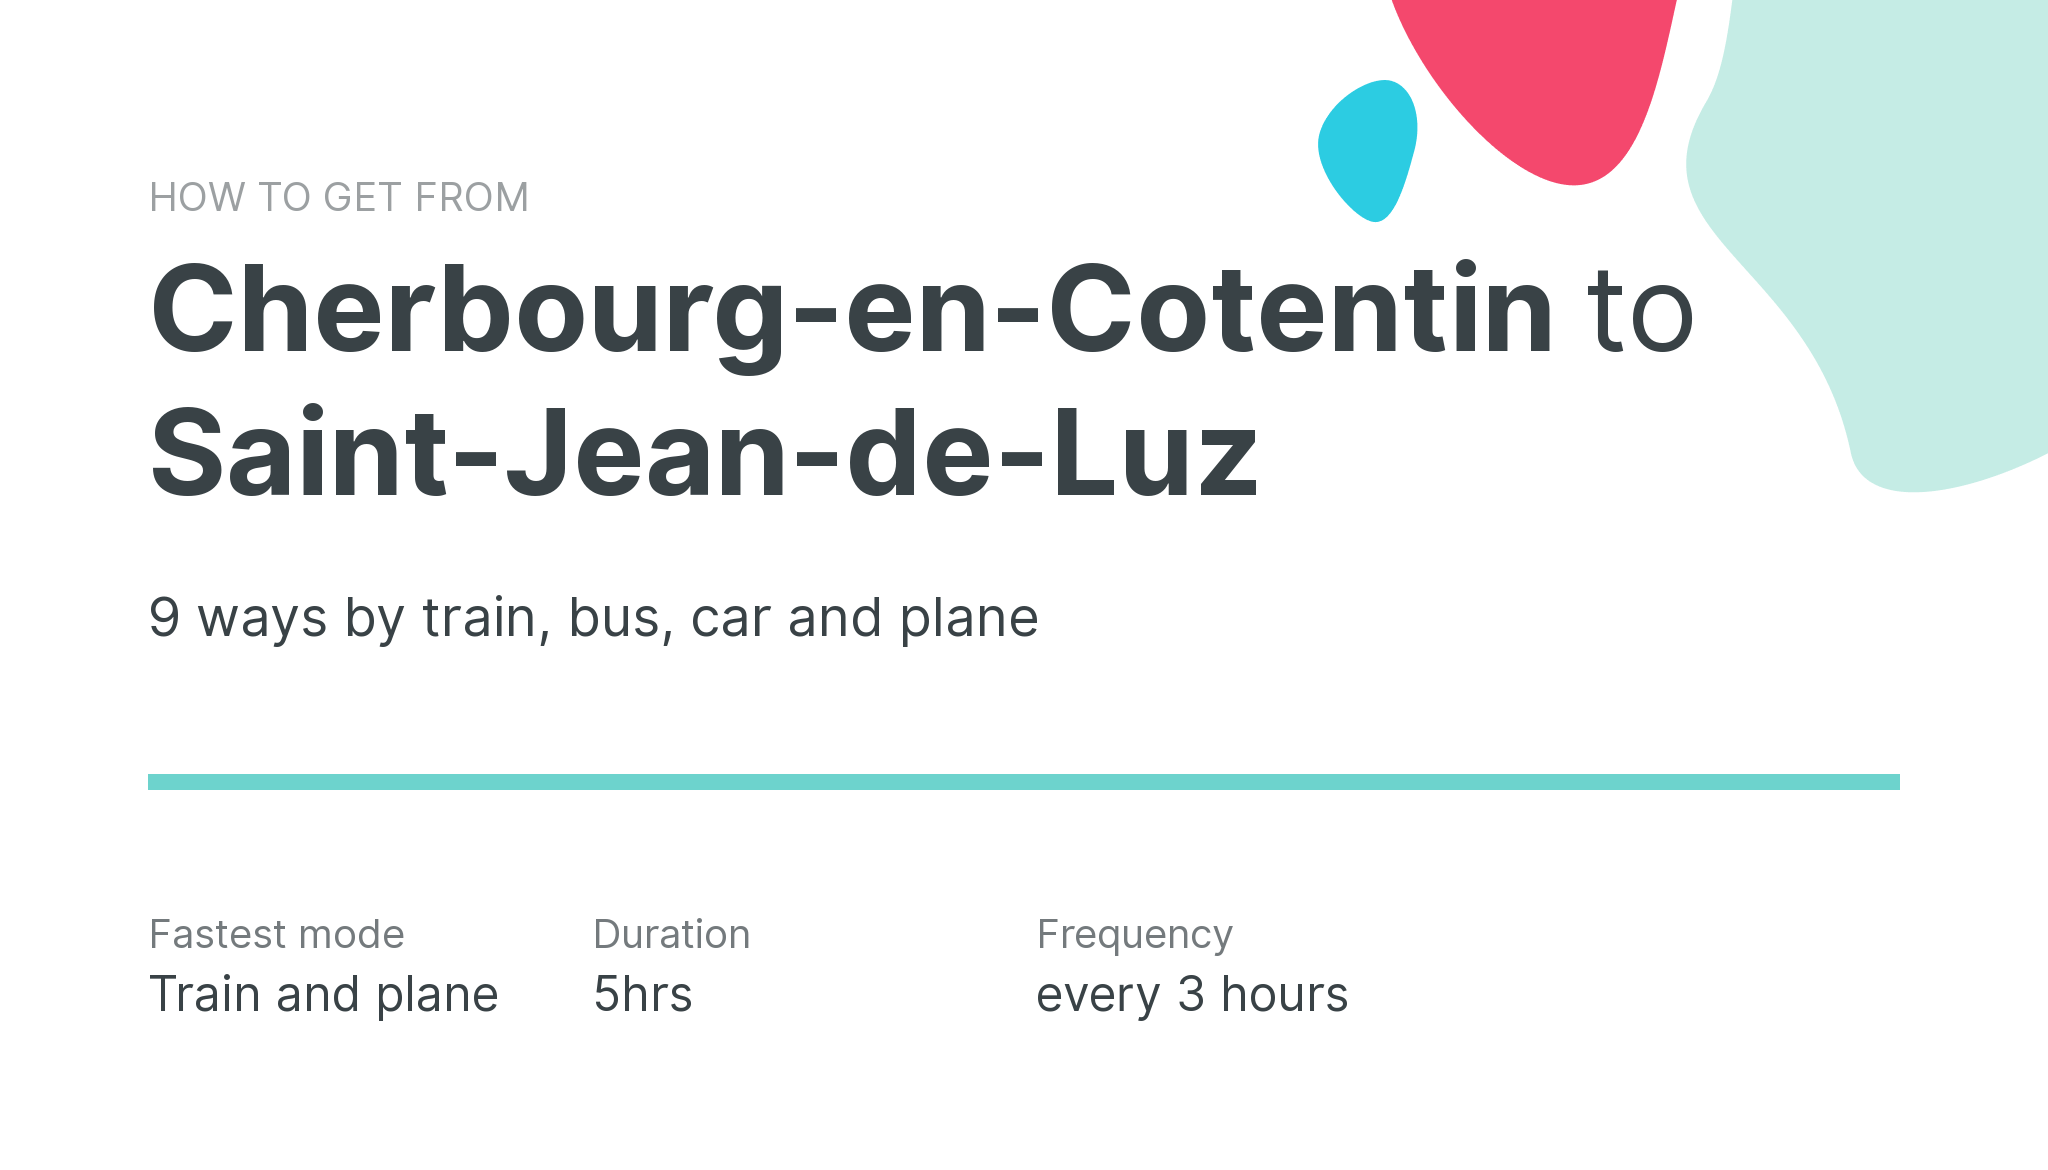 How do I get from Cherbourg-en-Cotentin to Saint-Jean-de-Luz